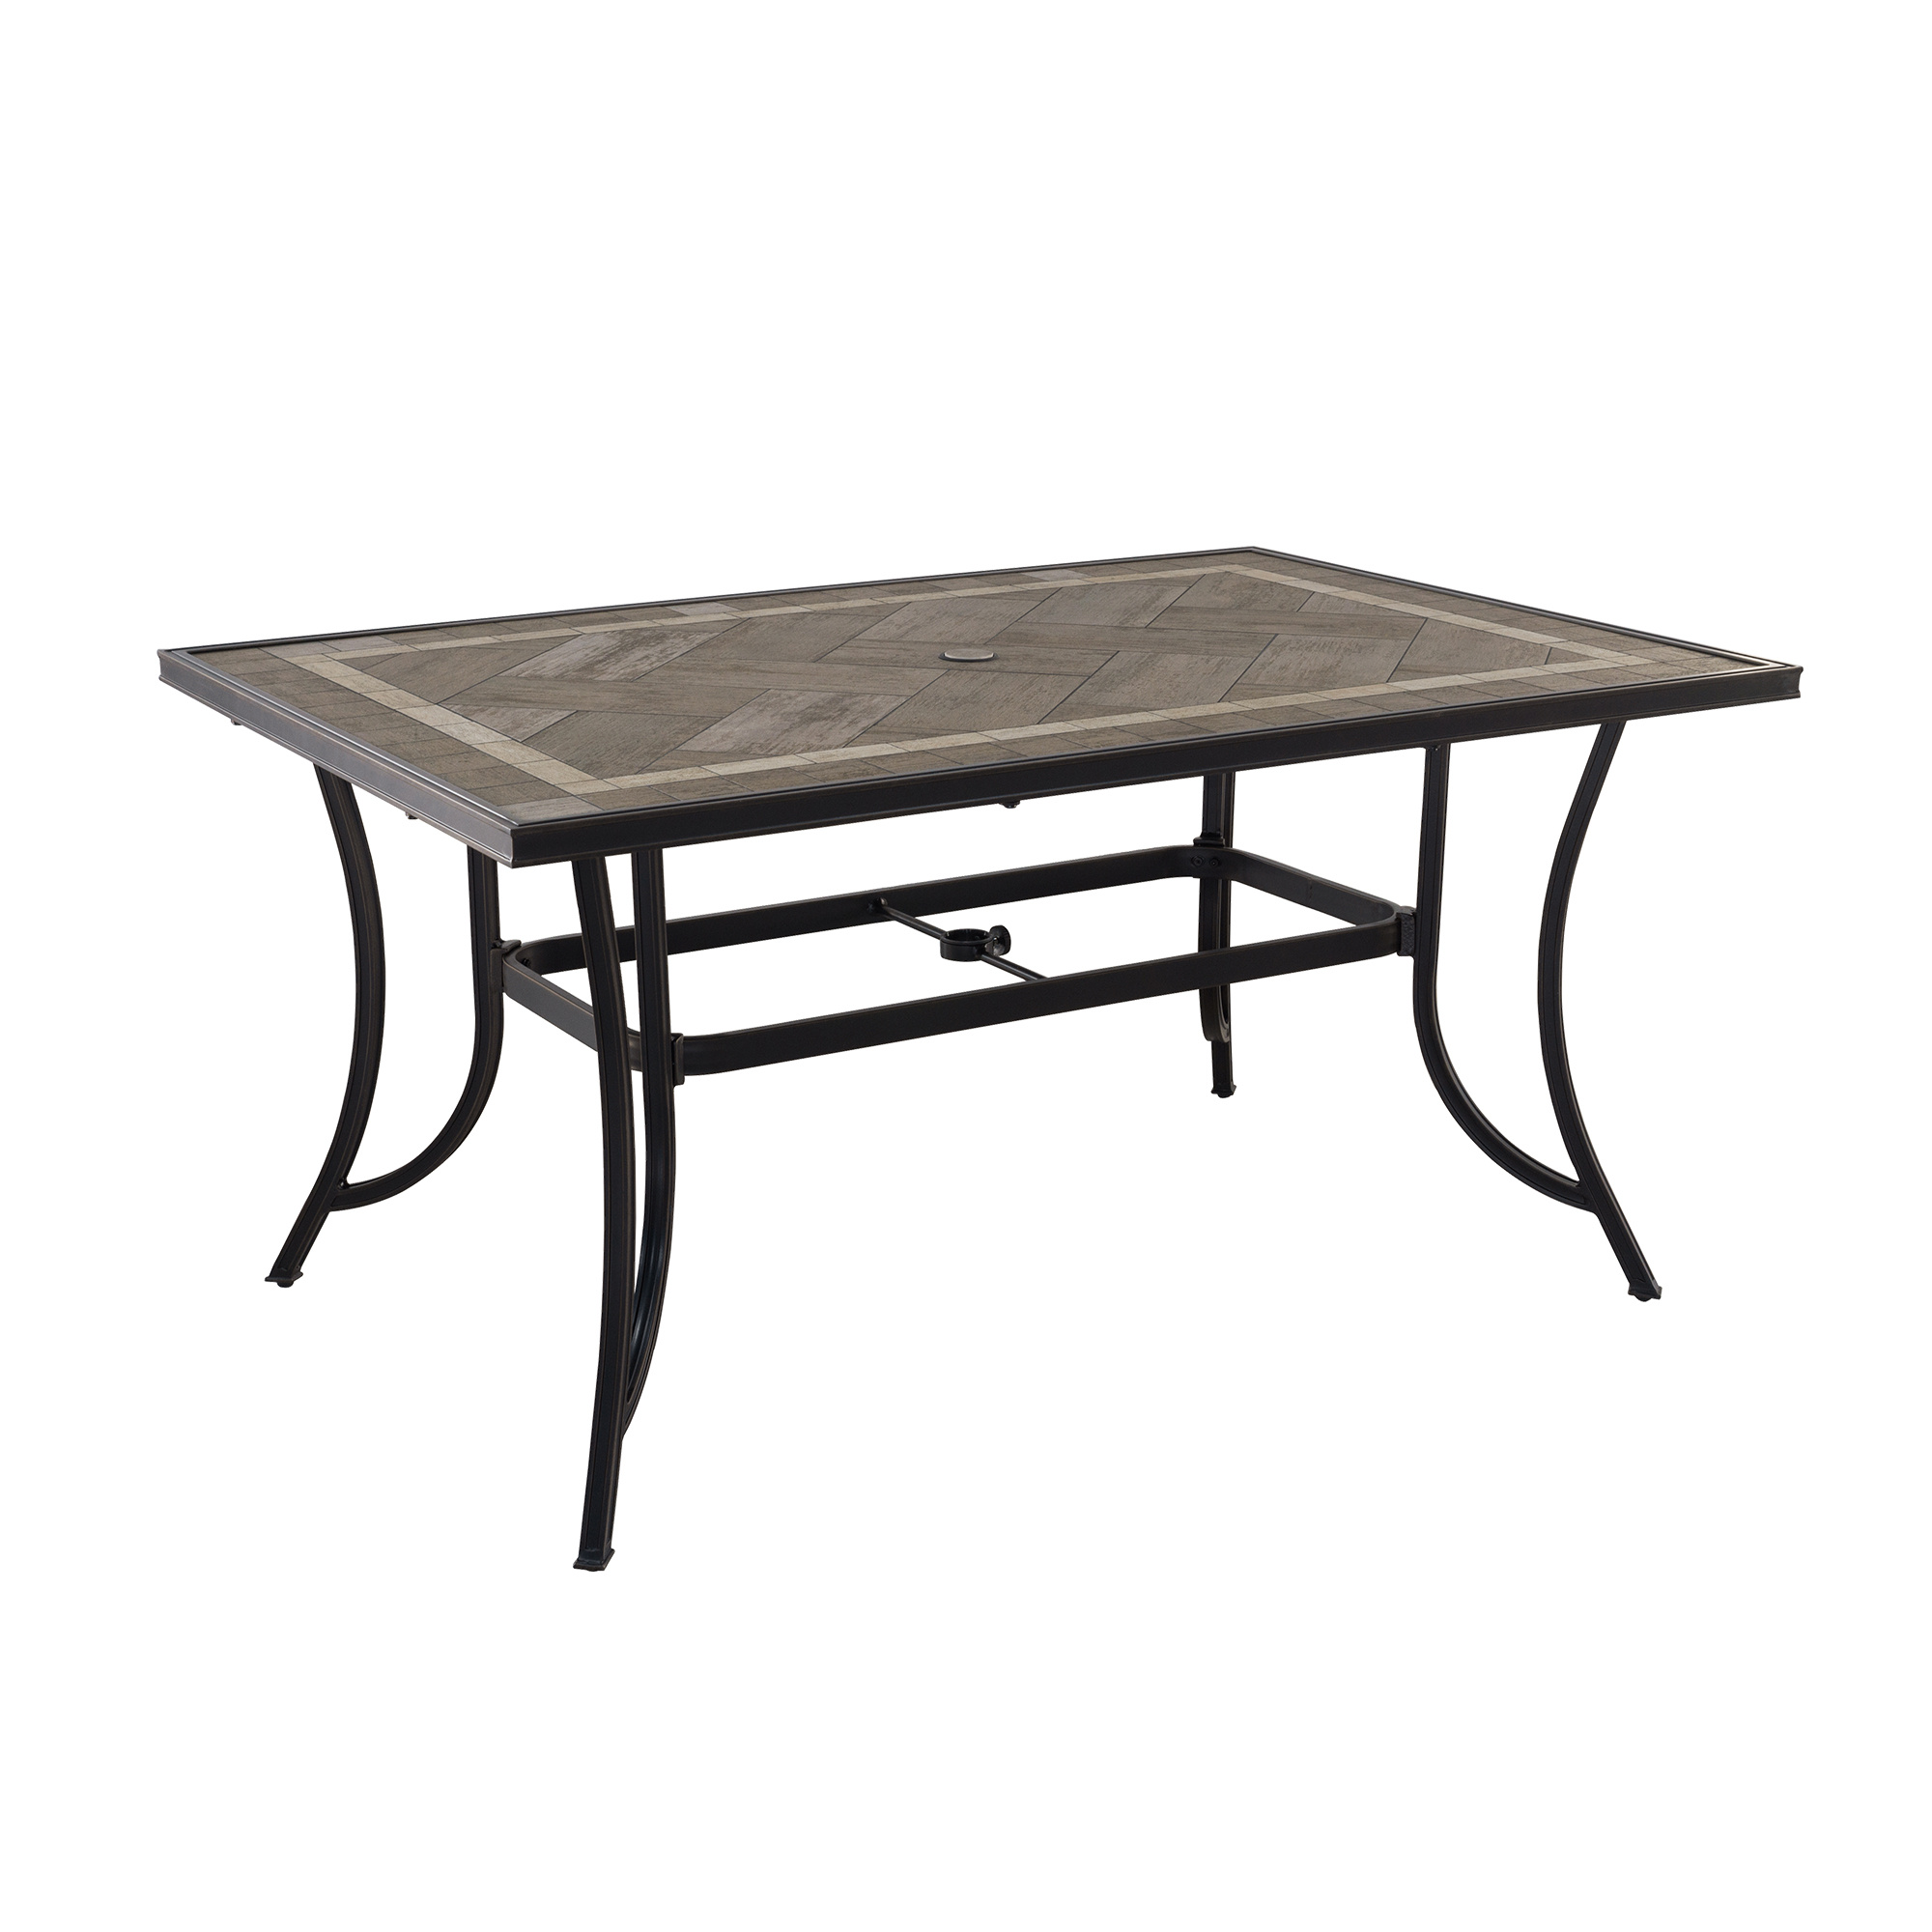 59 inch W * 40 inch D Aluminum Ceramic Tile Top Rectangular Dining Table with Umbrella Hole